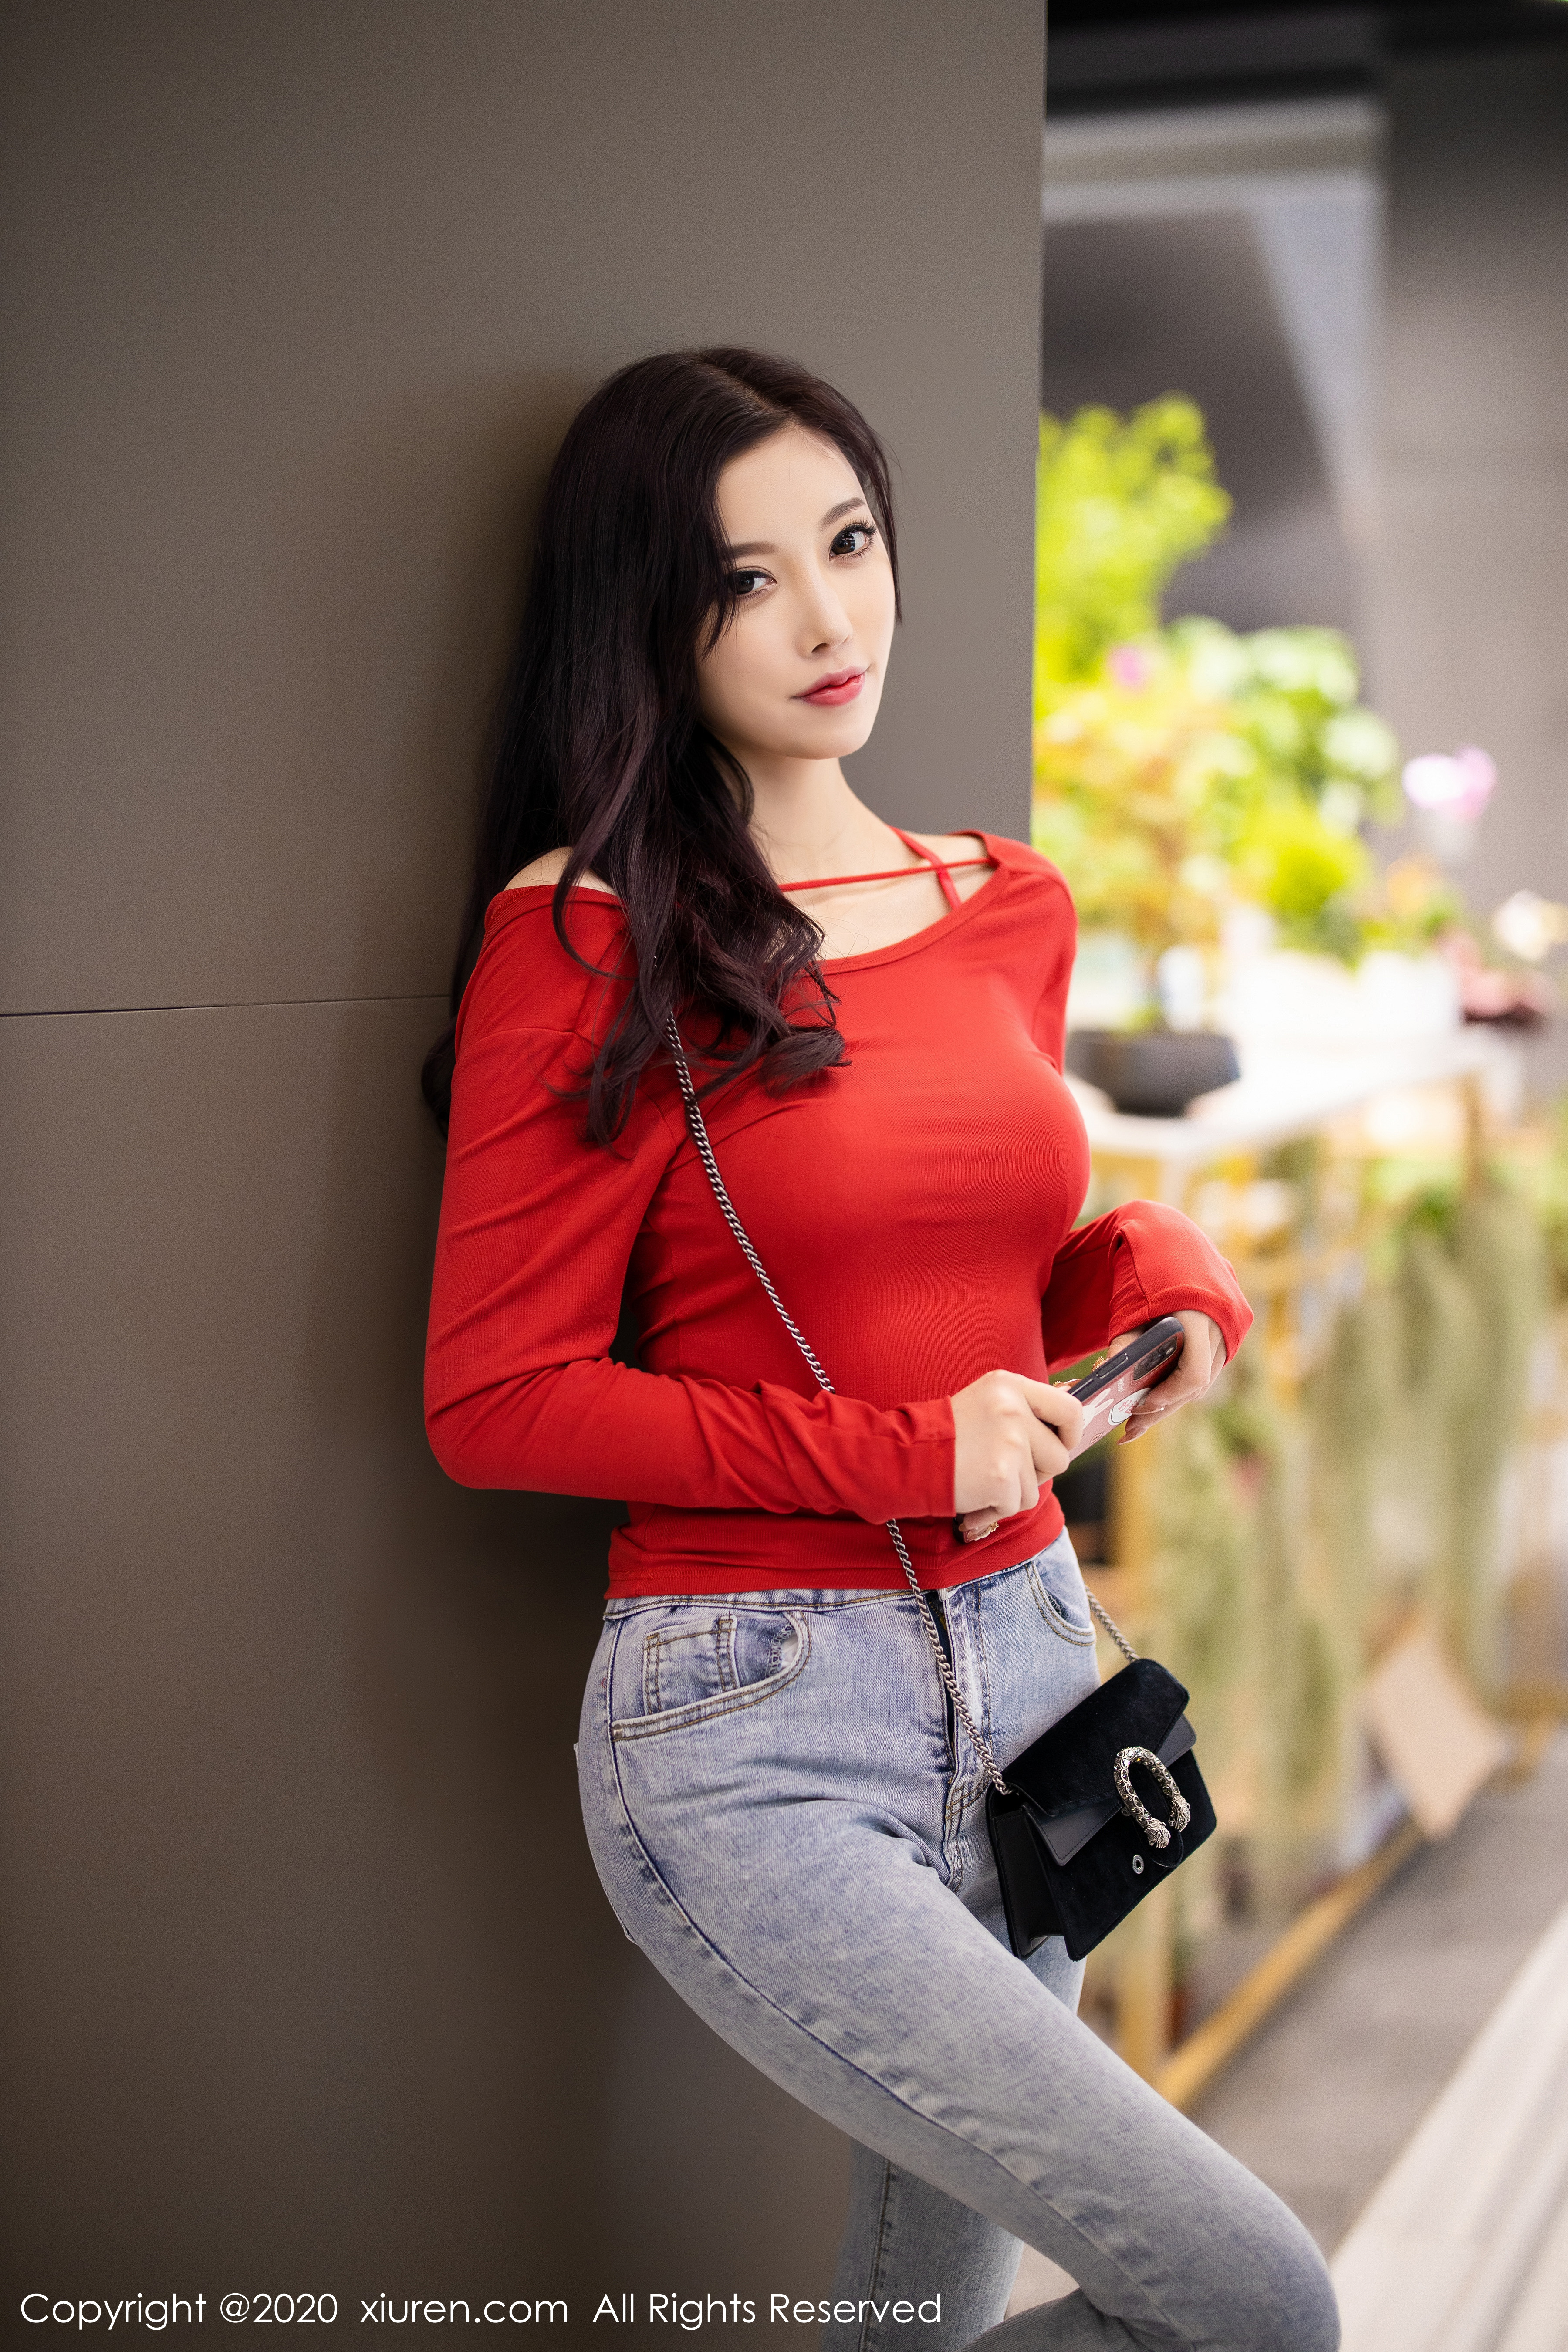 Chinese Model Asian Women 3600x5400